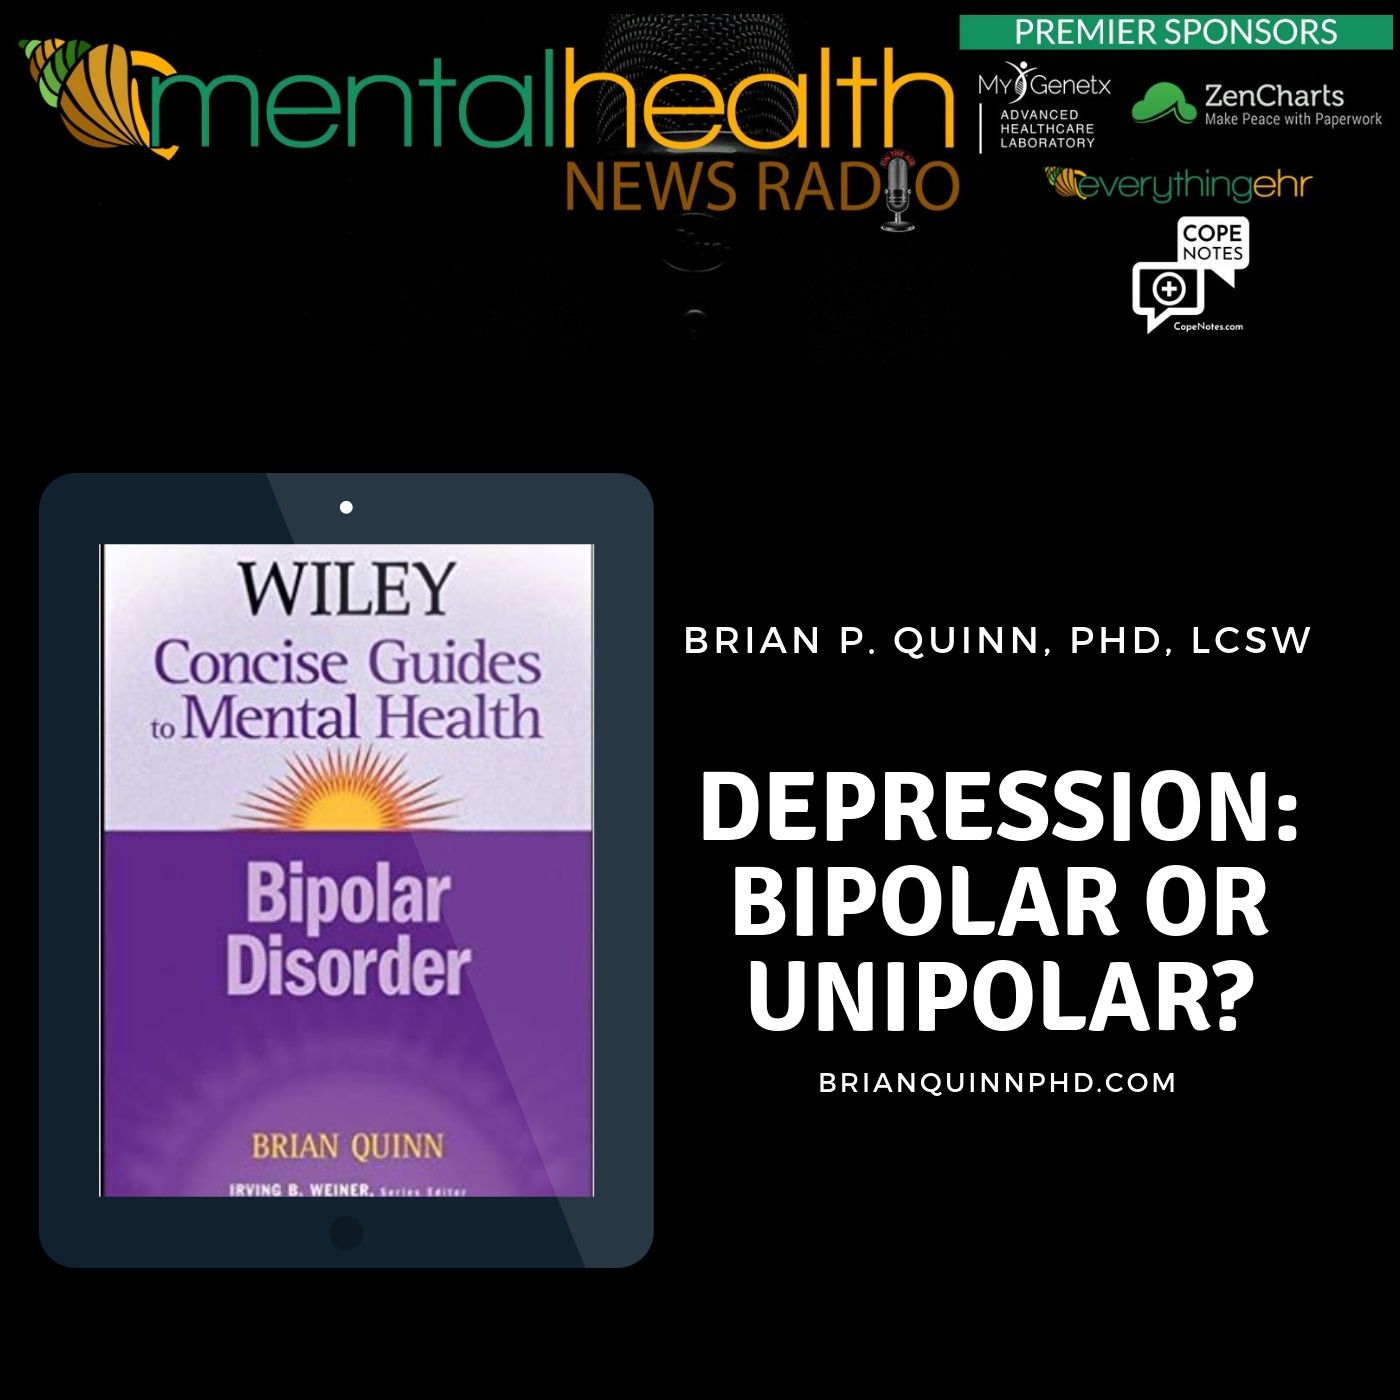 Mental Health News Radio - Depression: Bipolar or Unipolar with Brian Quinn, PhD, LCSW